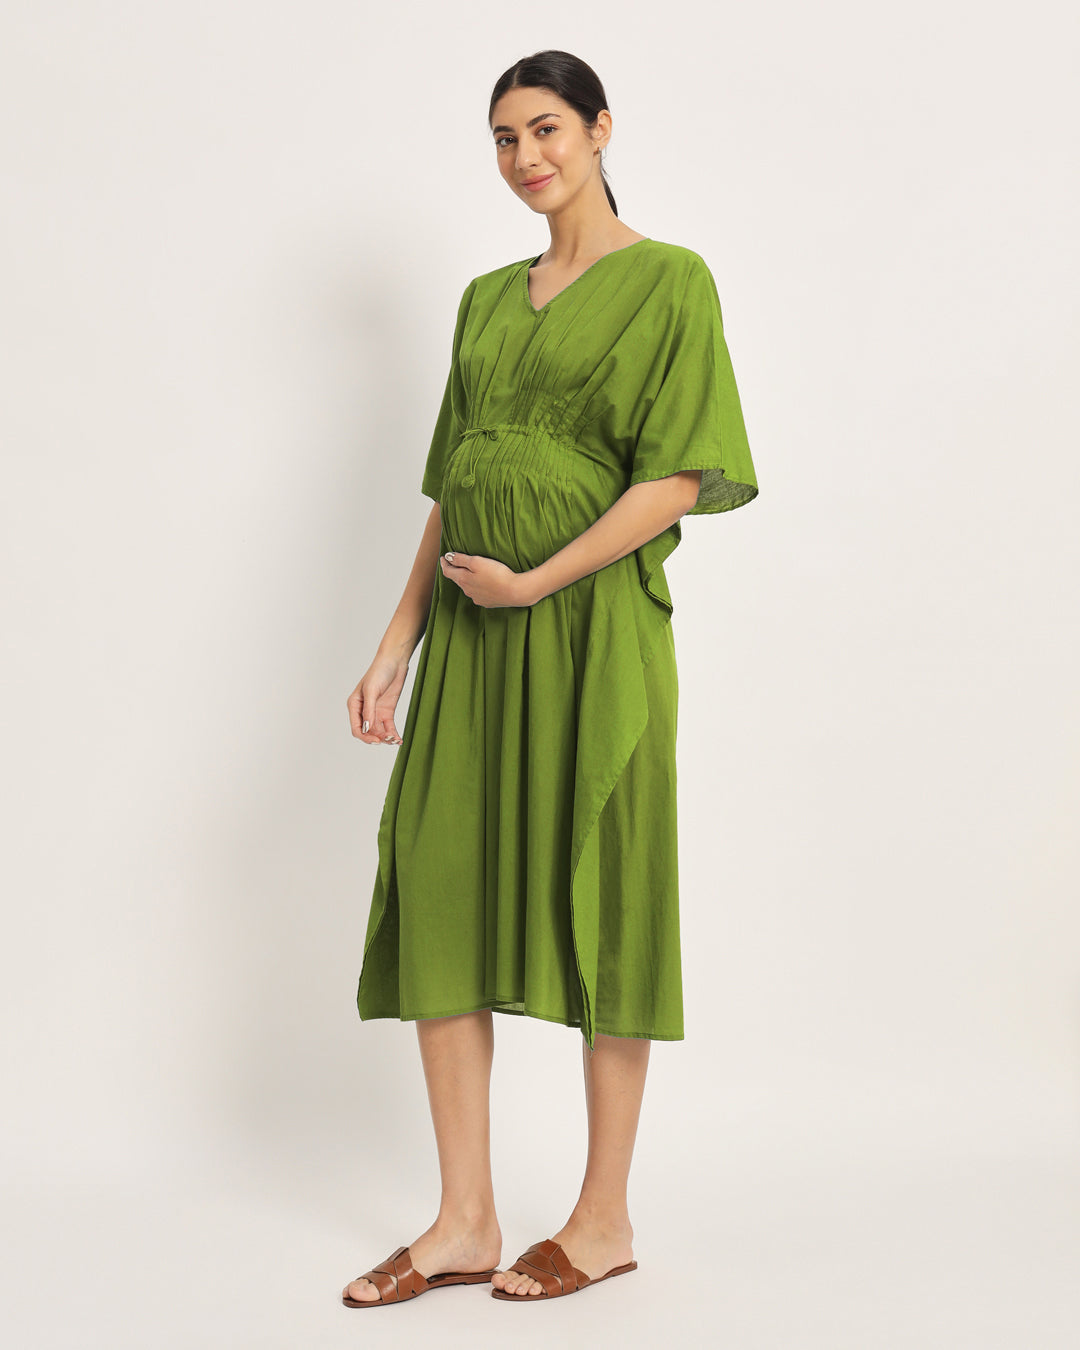 Combo: Iris Pink & Sage Green Mommy Mode Maternity & Nursing Dress